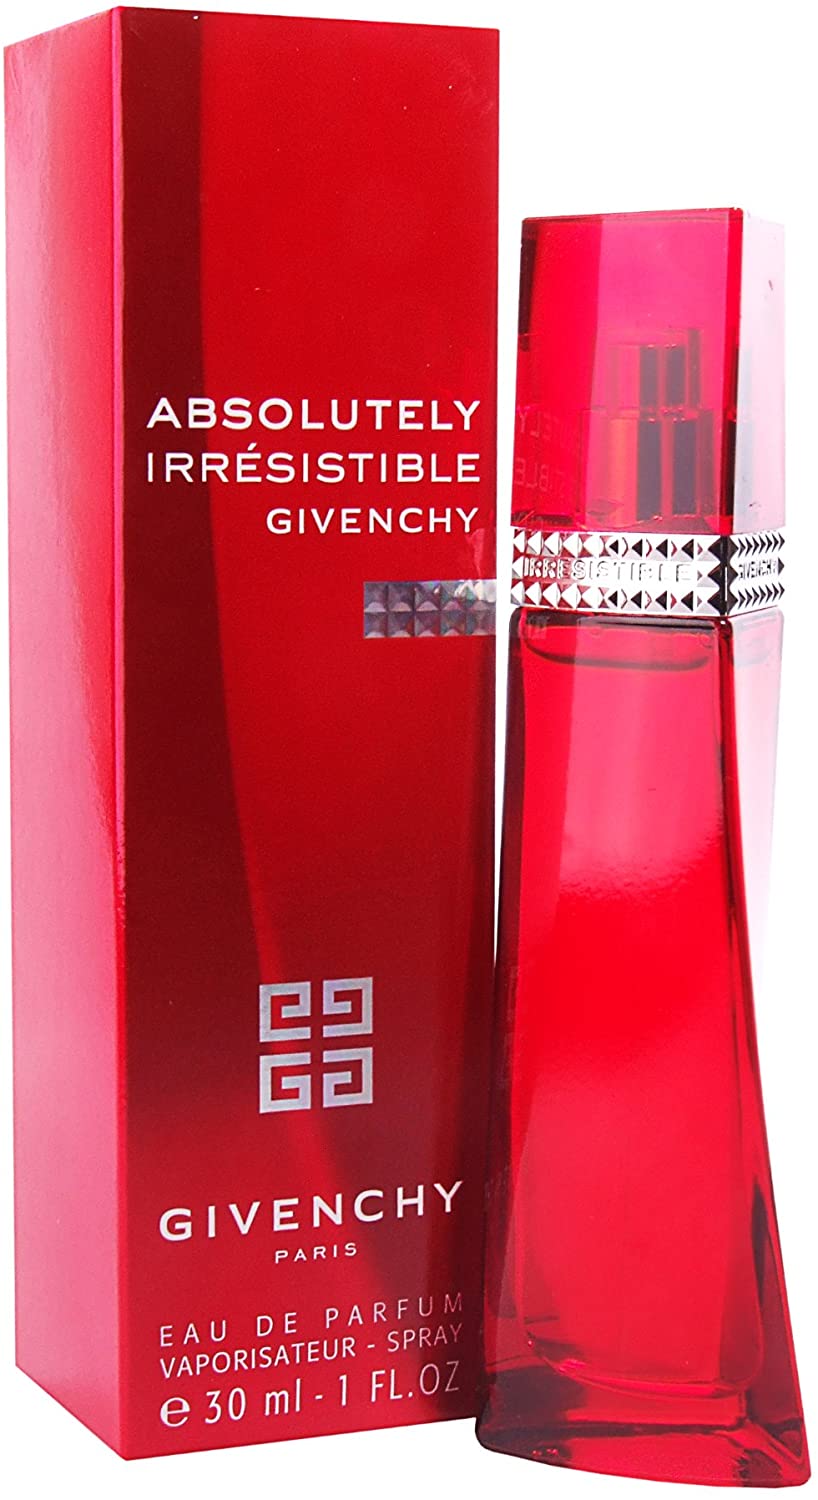 Givenchy Absolutely Irresistible Givenchy, edp 75ml